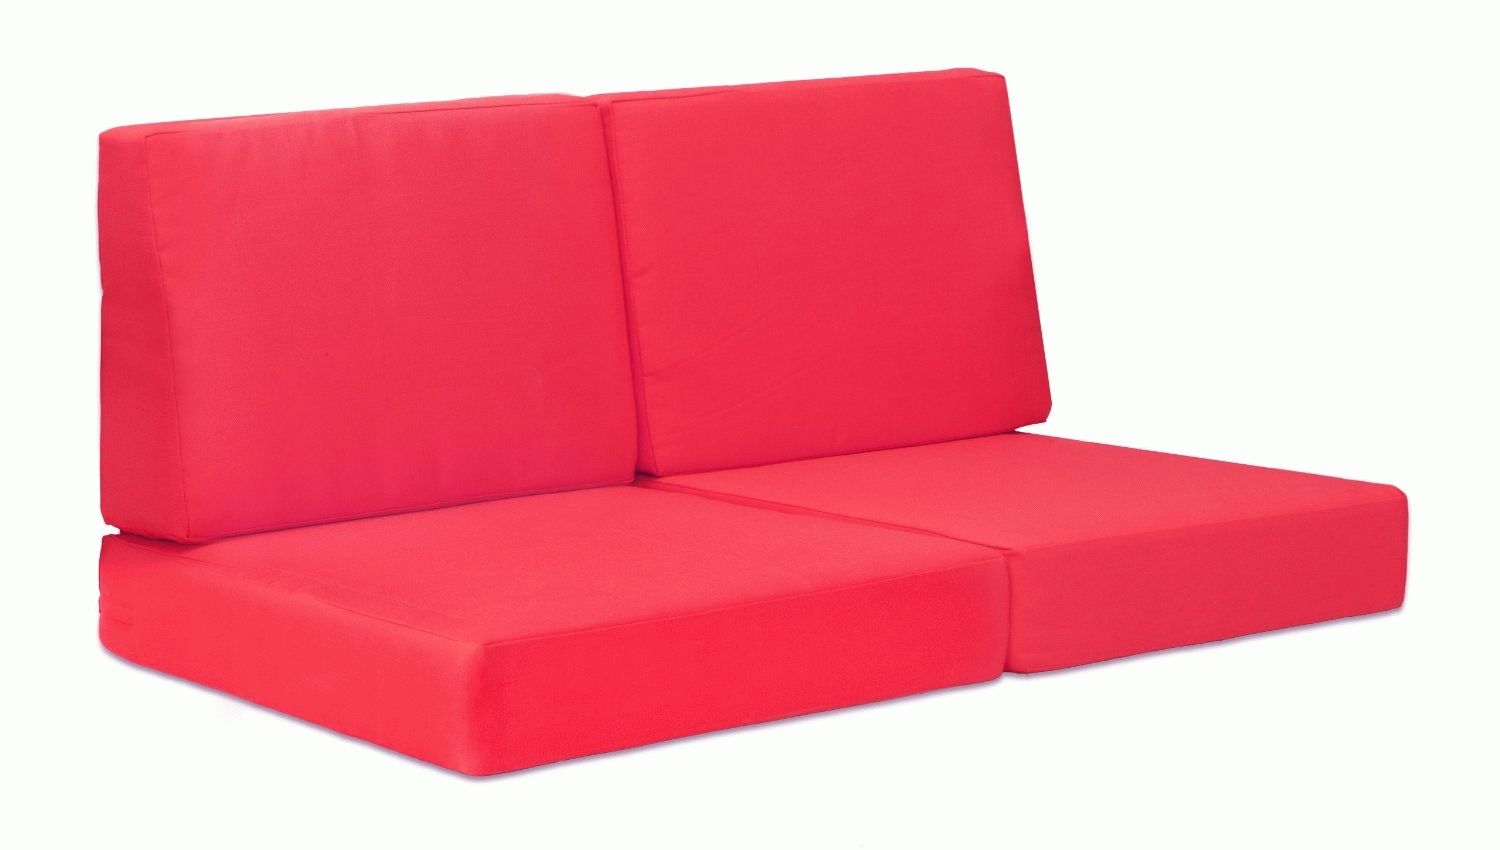 Cosmopolitan|sofa Cushions Intended For Sofa Cushions (Photo 2 of 30)